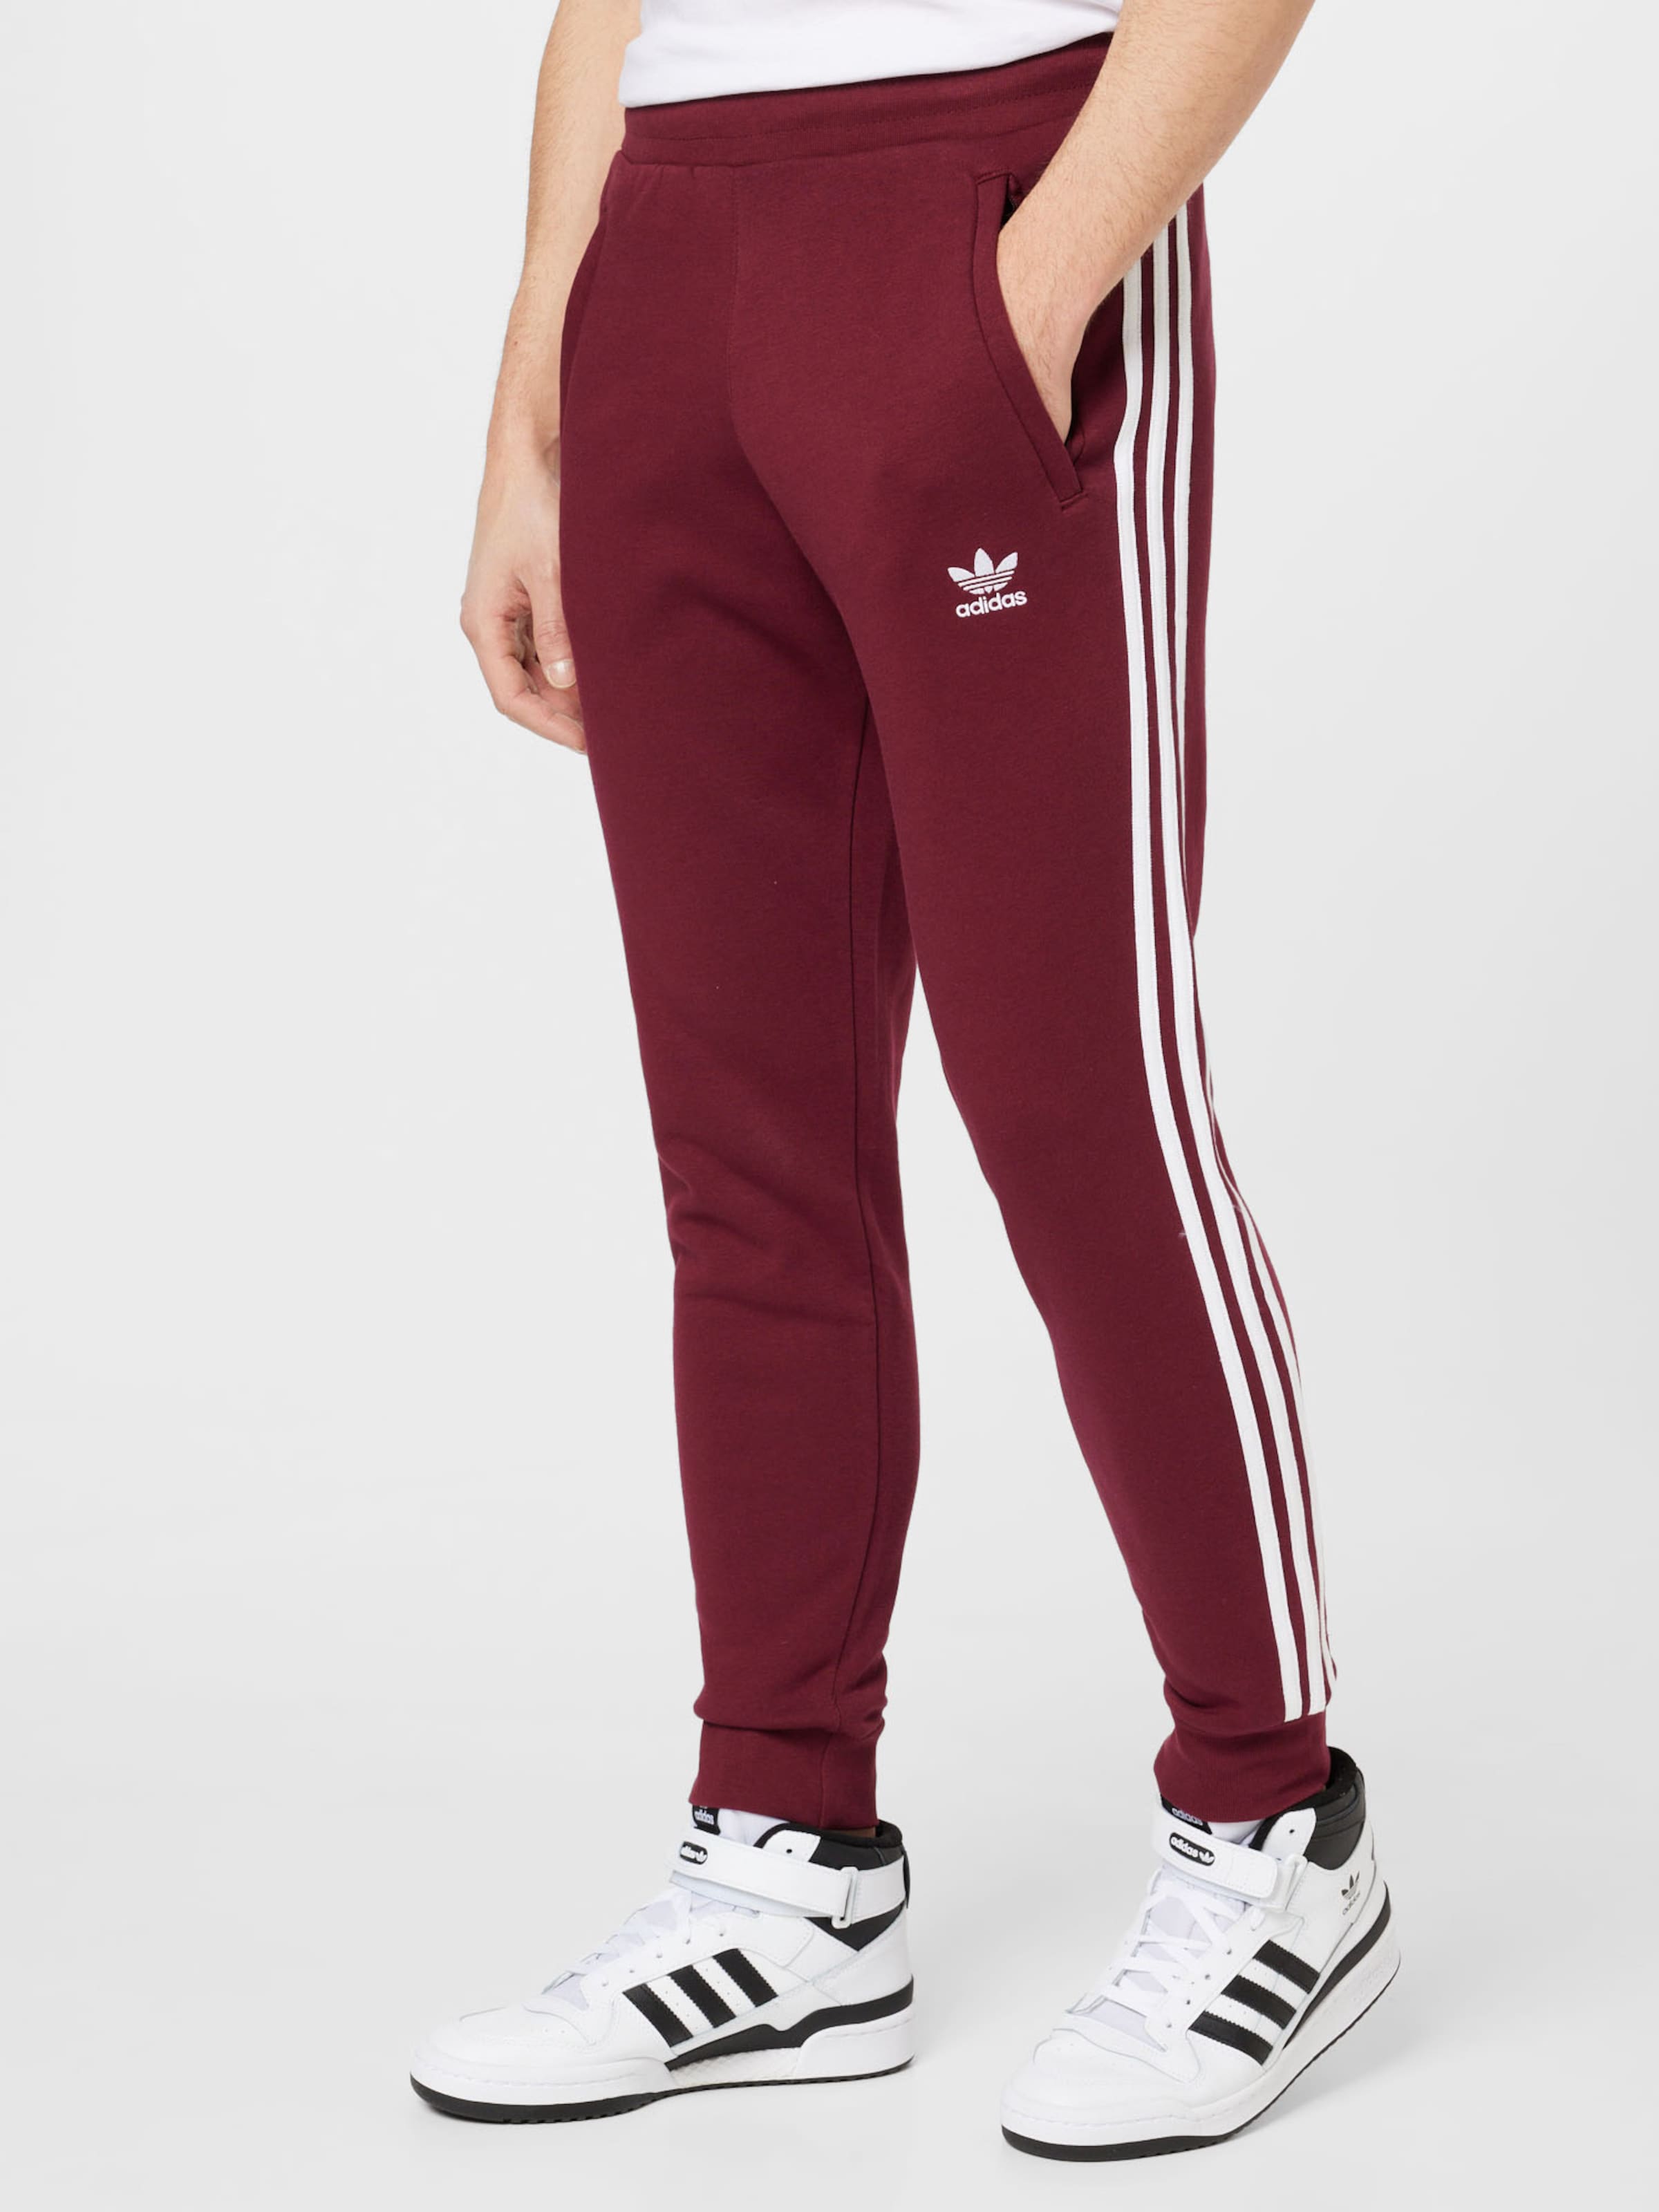 Sweatpants Adidas Originals 3-Stripes Tapered Pant Trick legink/white |  Bludshop.com